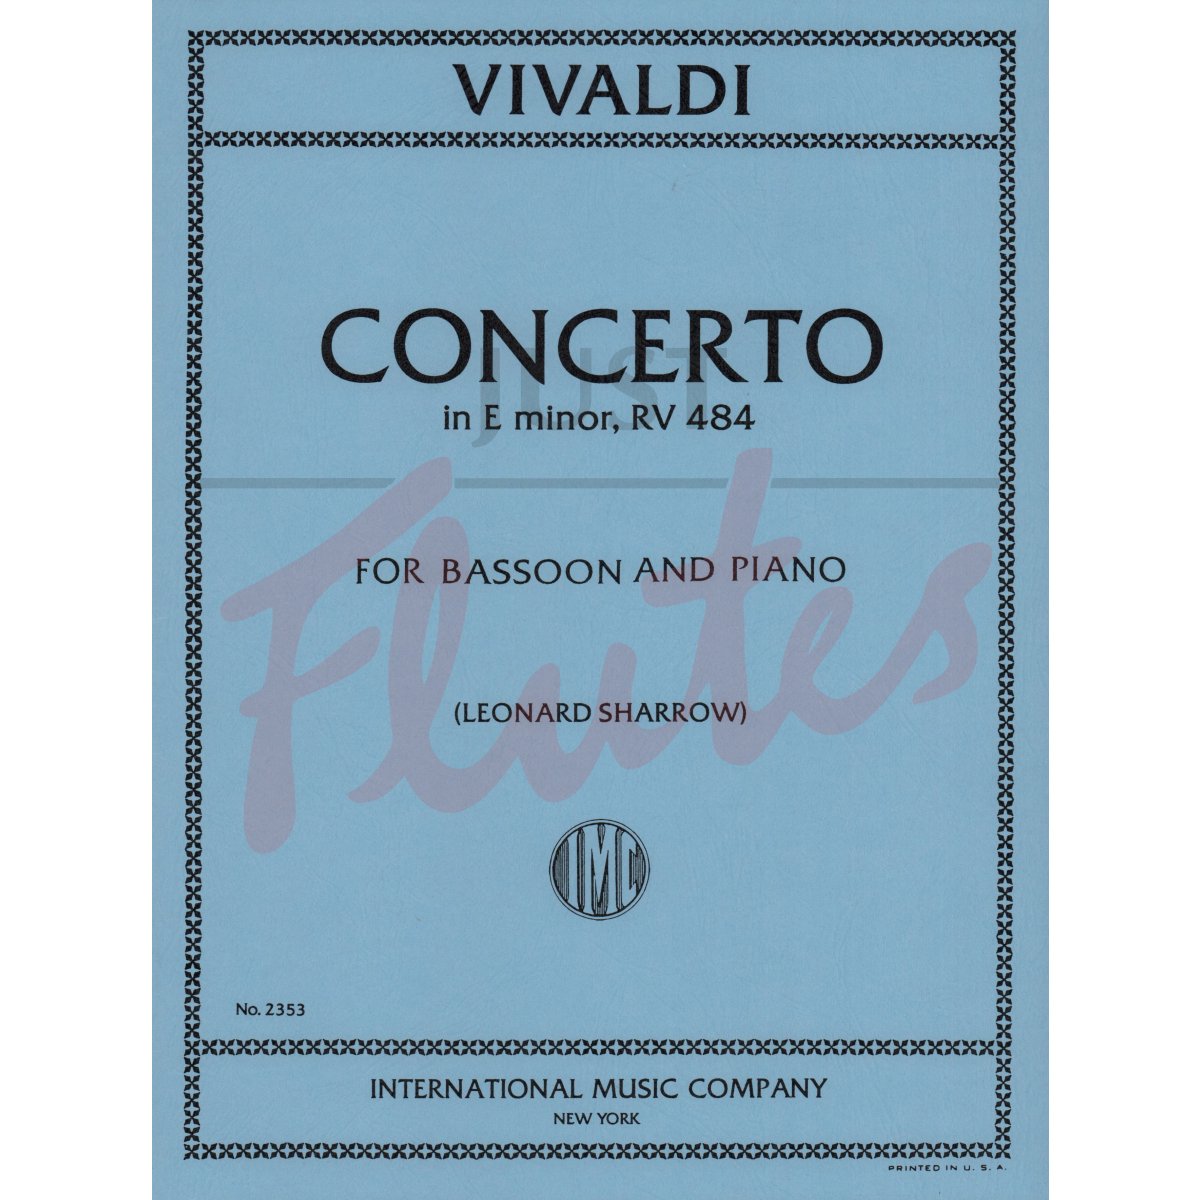 Concerto in E minor for Bassoon and Piano